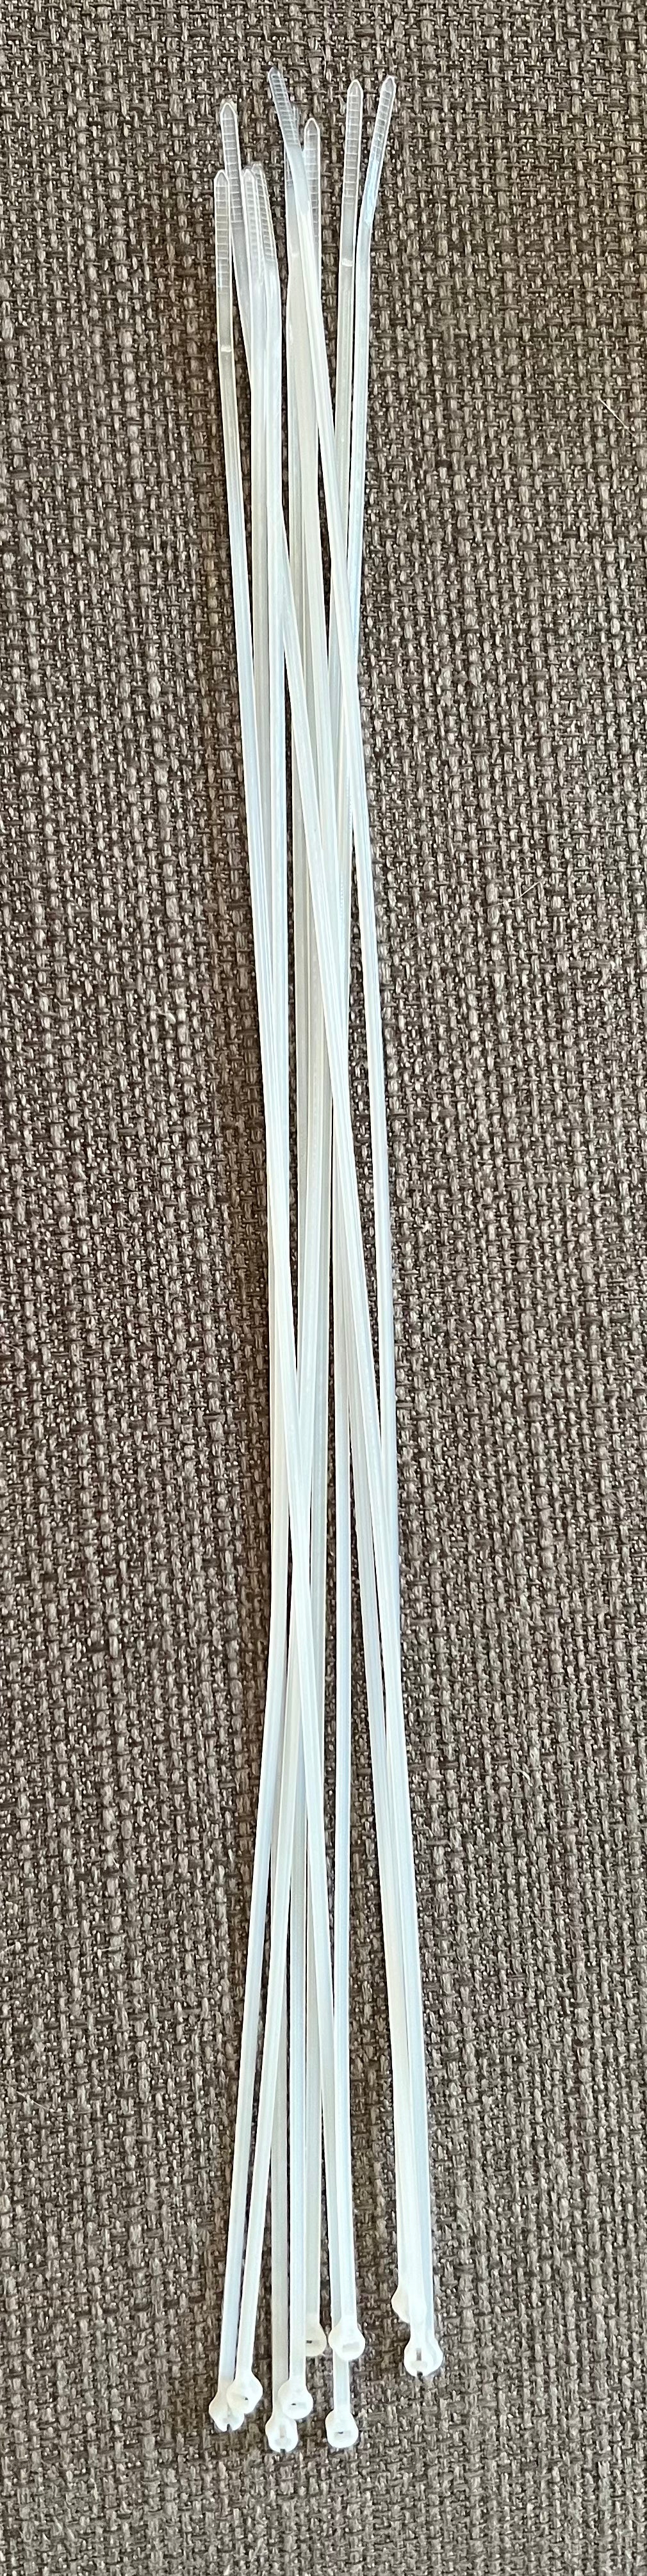 Ultra thin 14” zip ties. Body cable ties - truborns